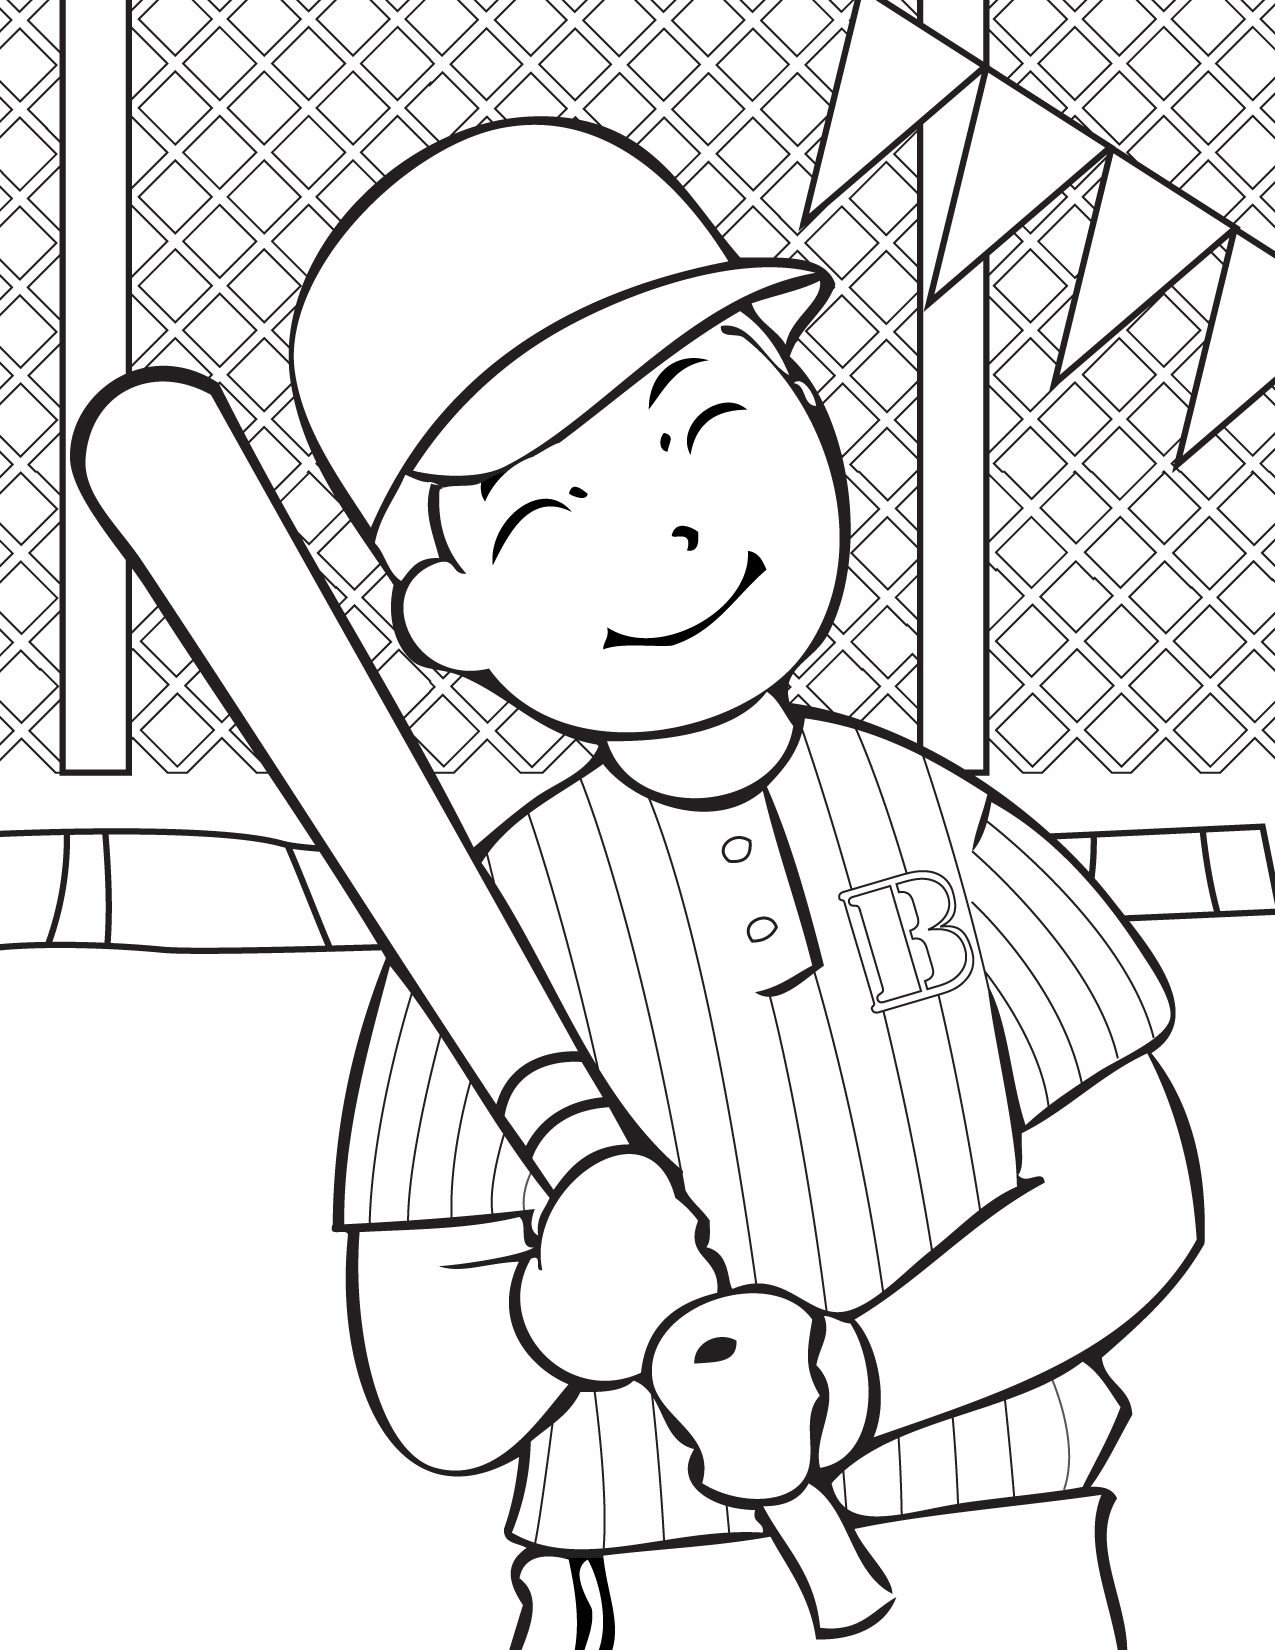 Download Free Printable Baseball Coloring Pages for Kids - Best Coloring Pages For Kids